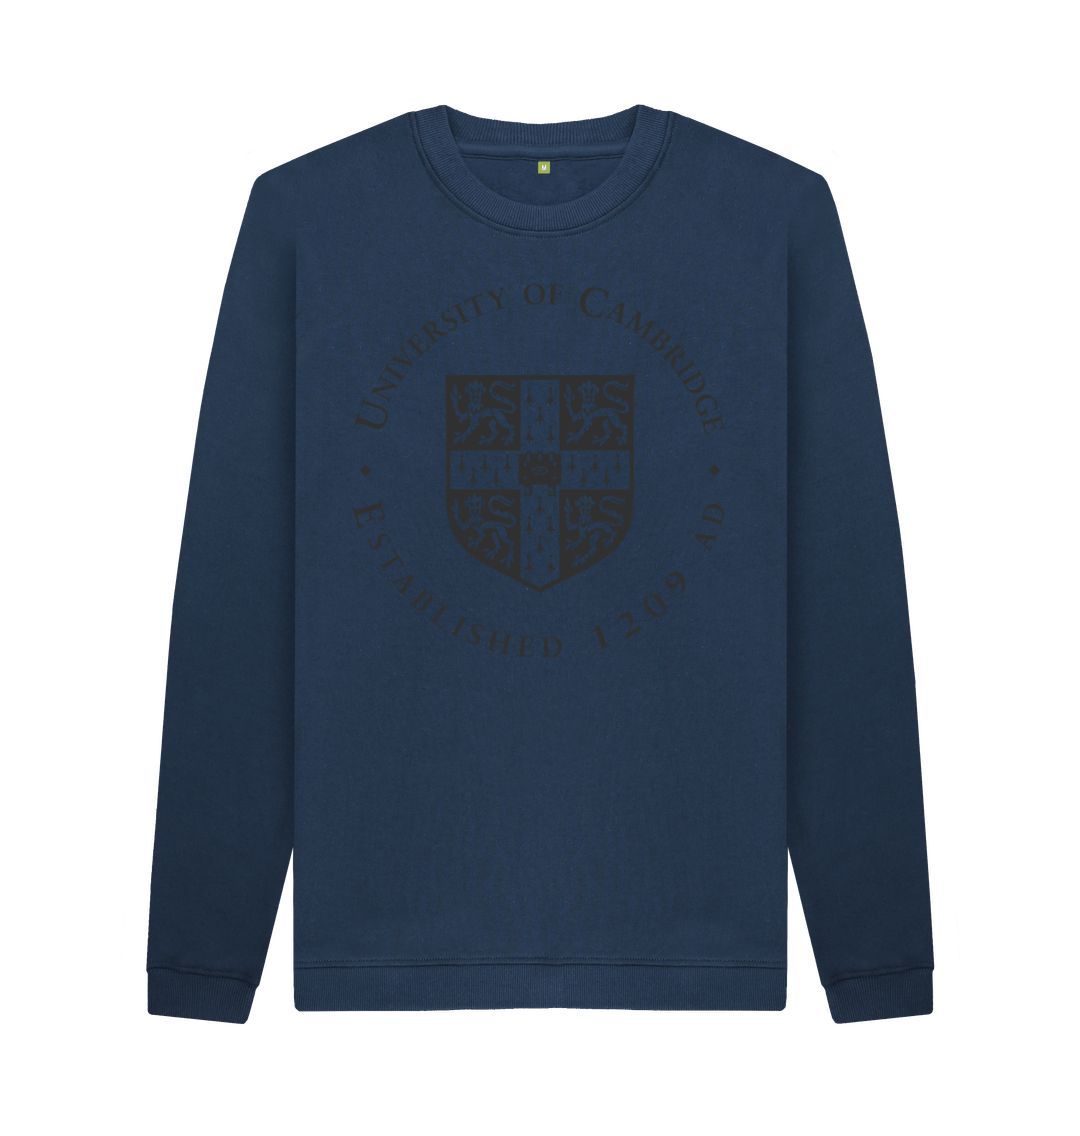 Navy Blue Men's University of Cambridge Crew Neck Sweater, Large Shield